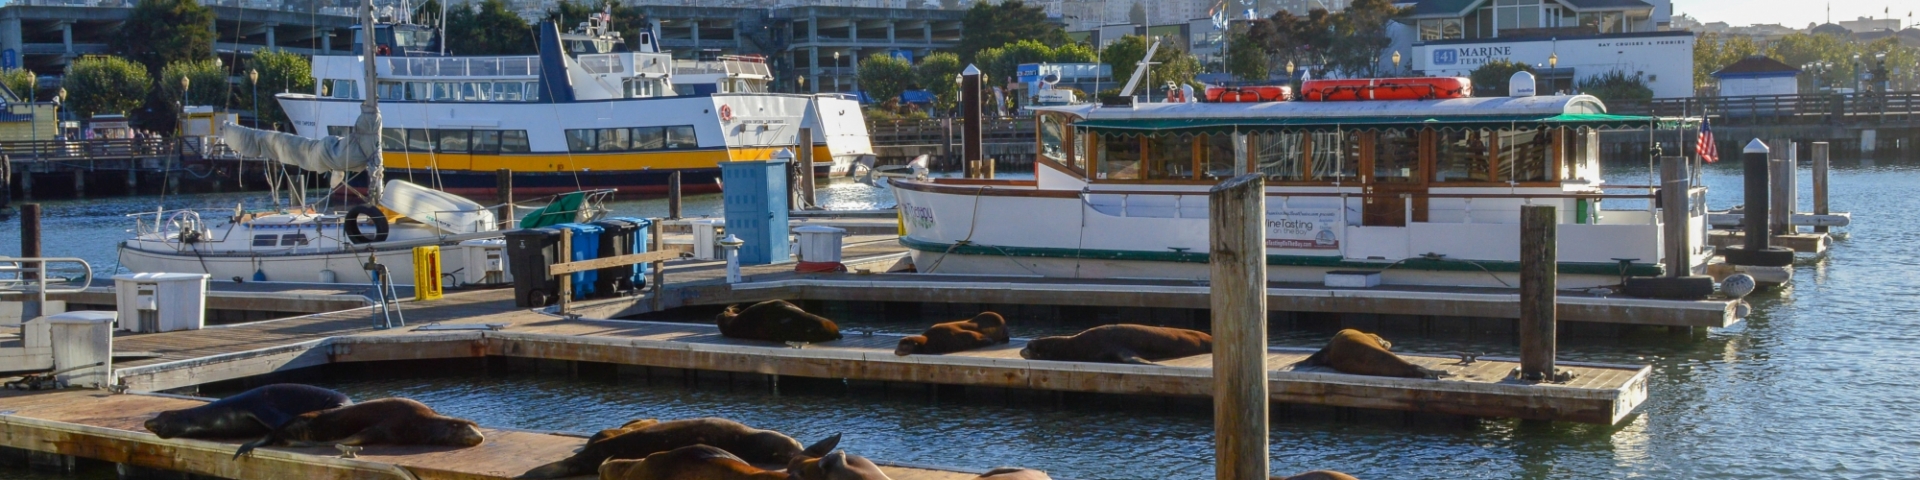 Sea Lions At Pier 39 In San Francisco